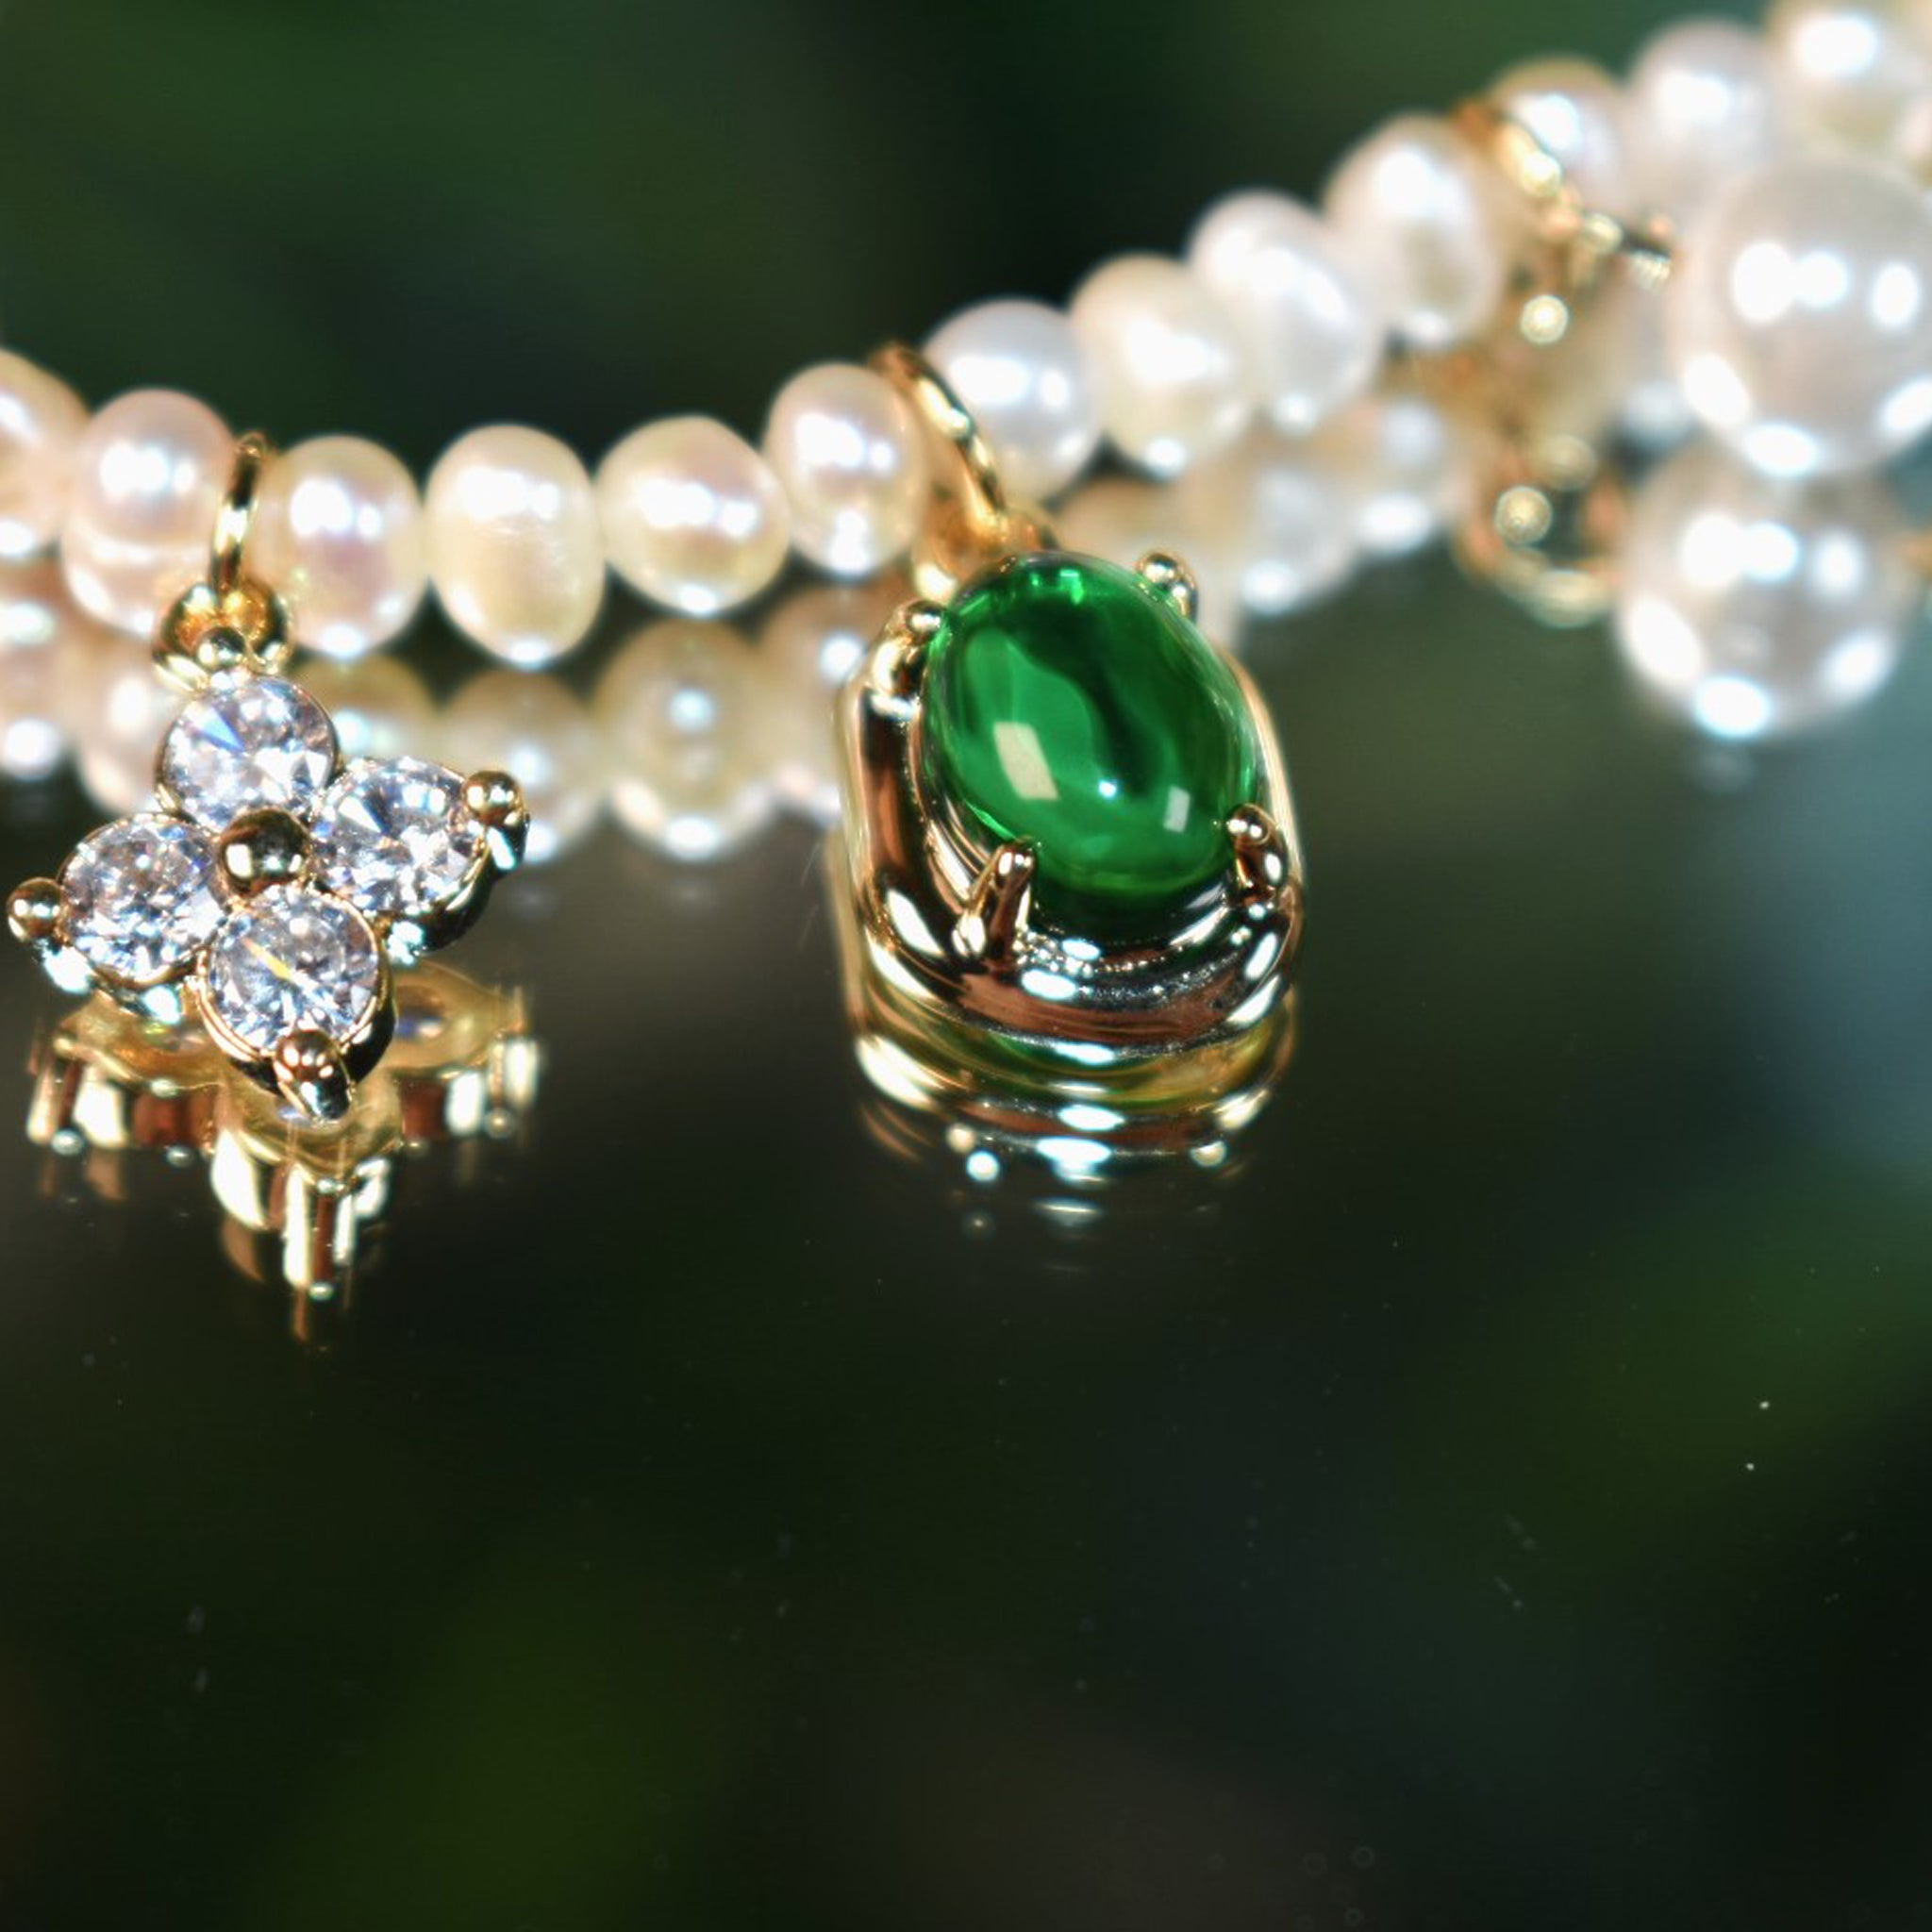 Pearls of Korea Green Beads Bracelet